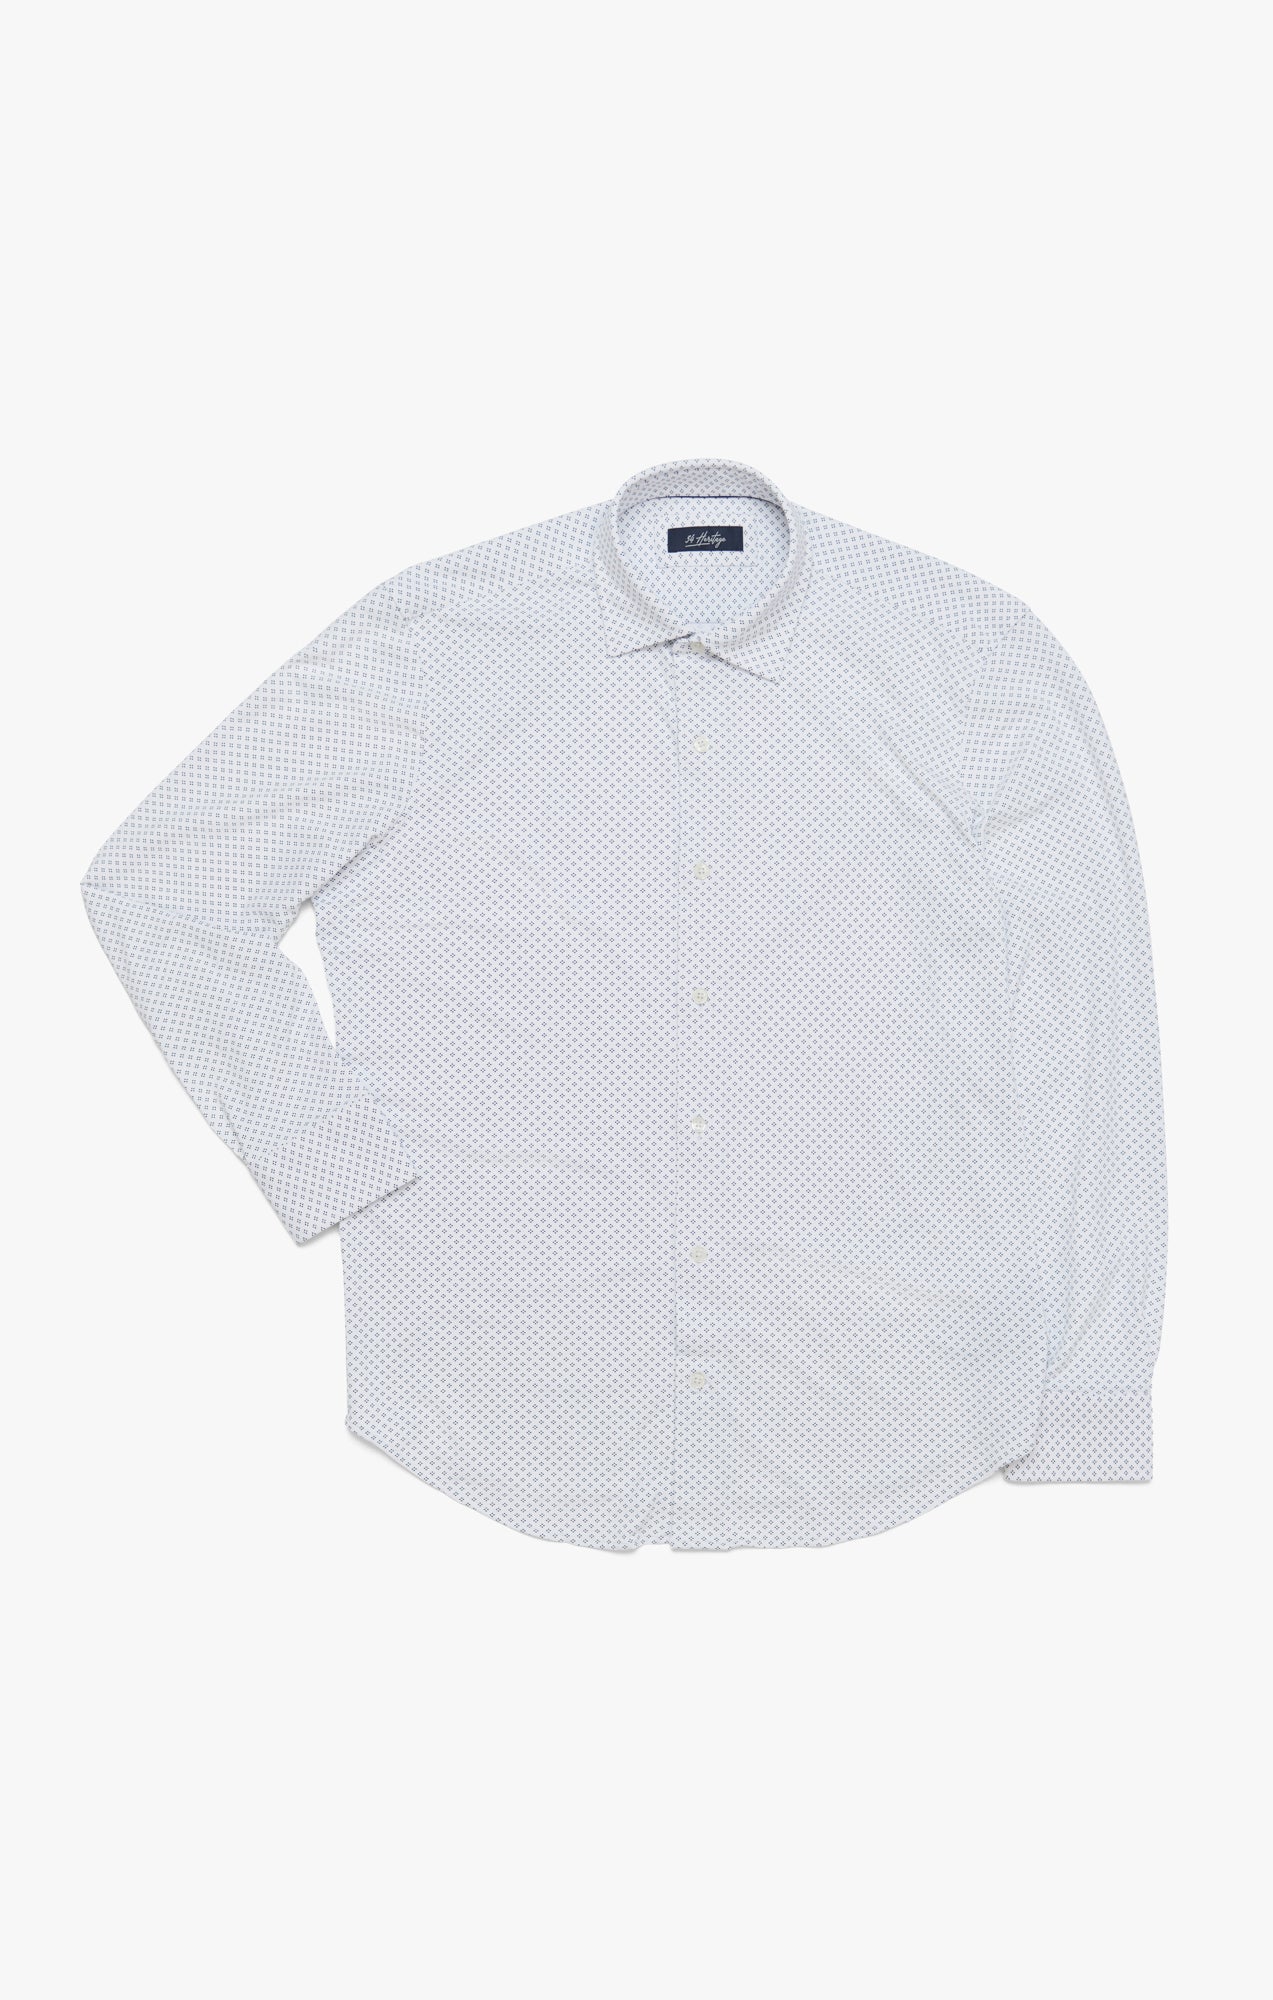 Diamond Dot Tech Shirt In White